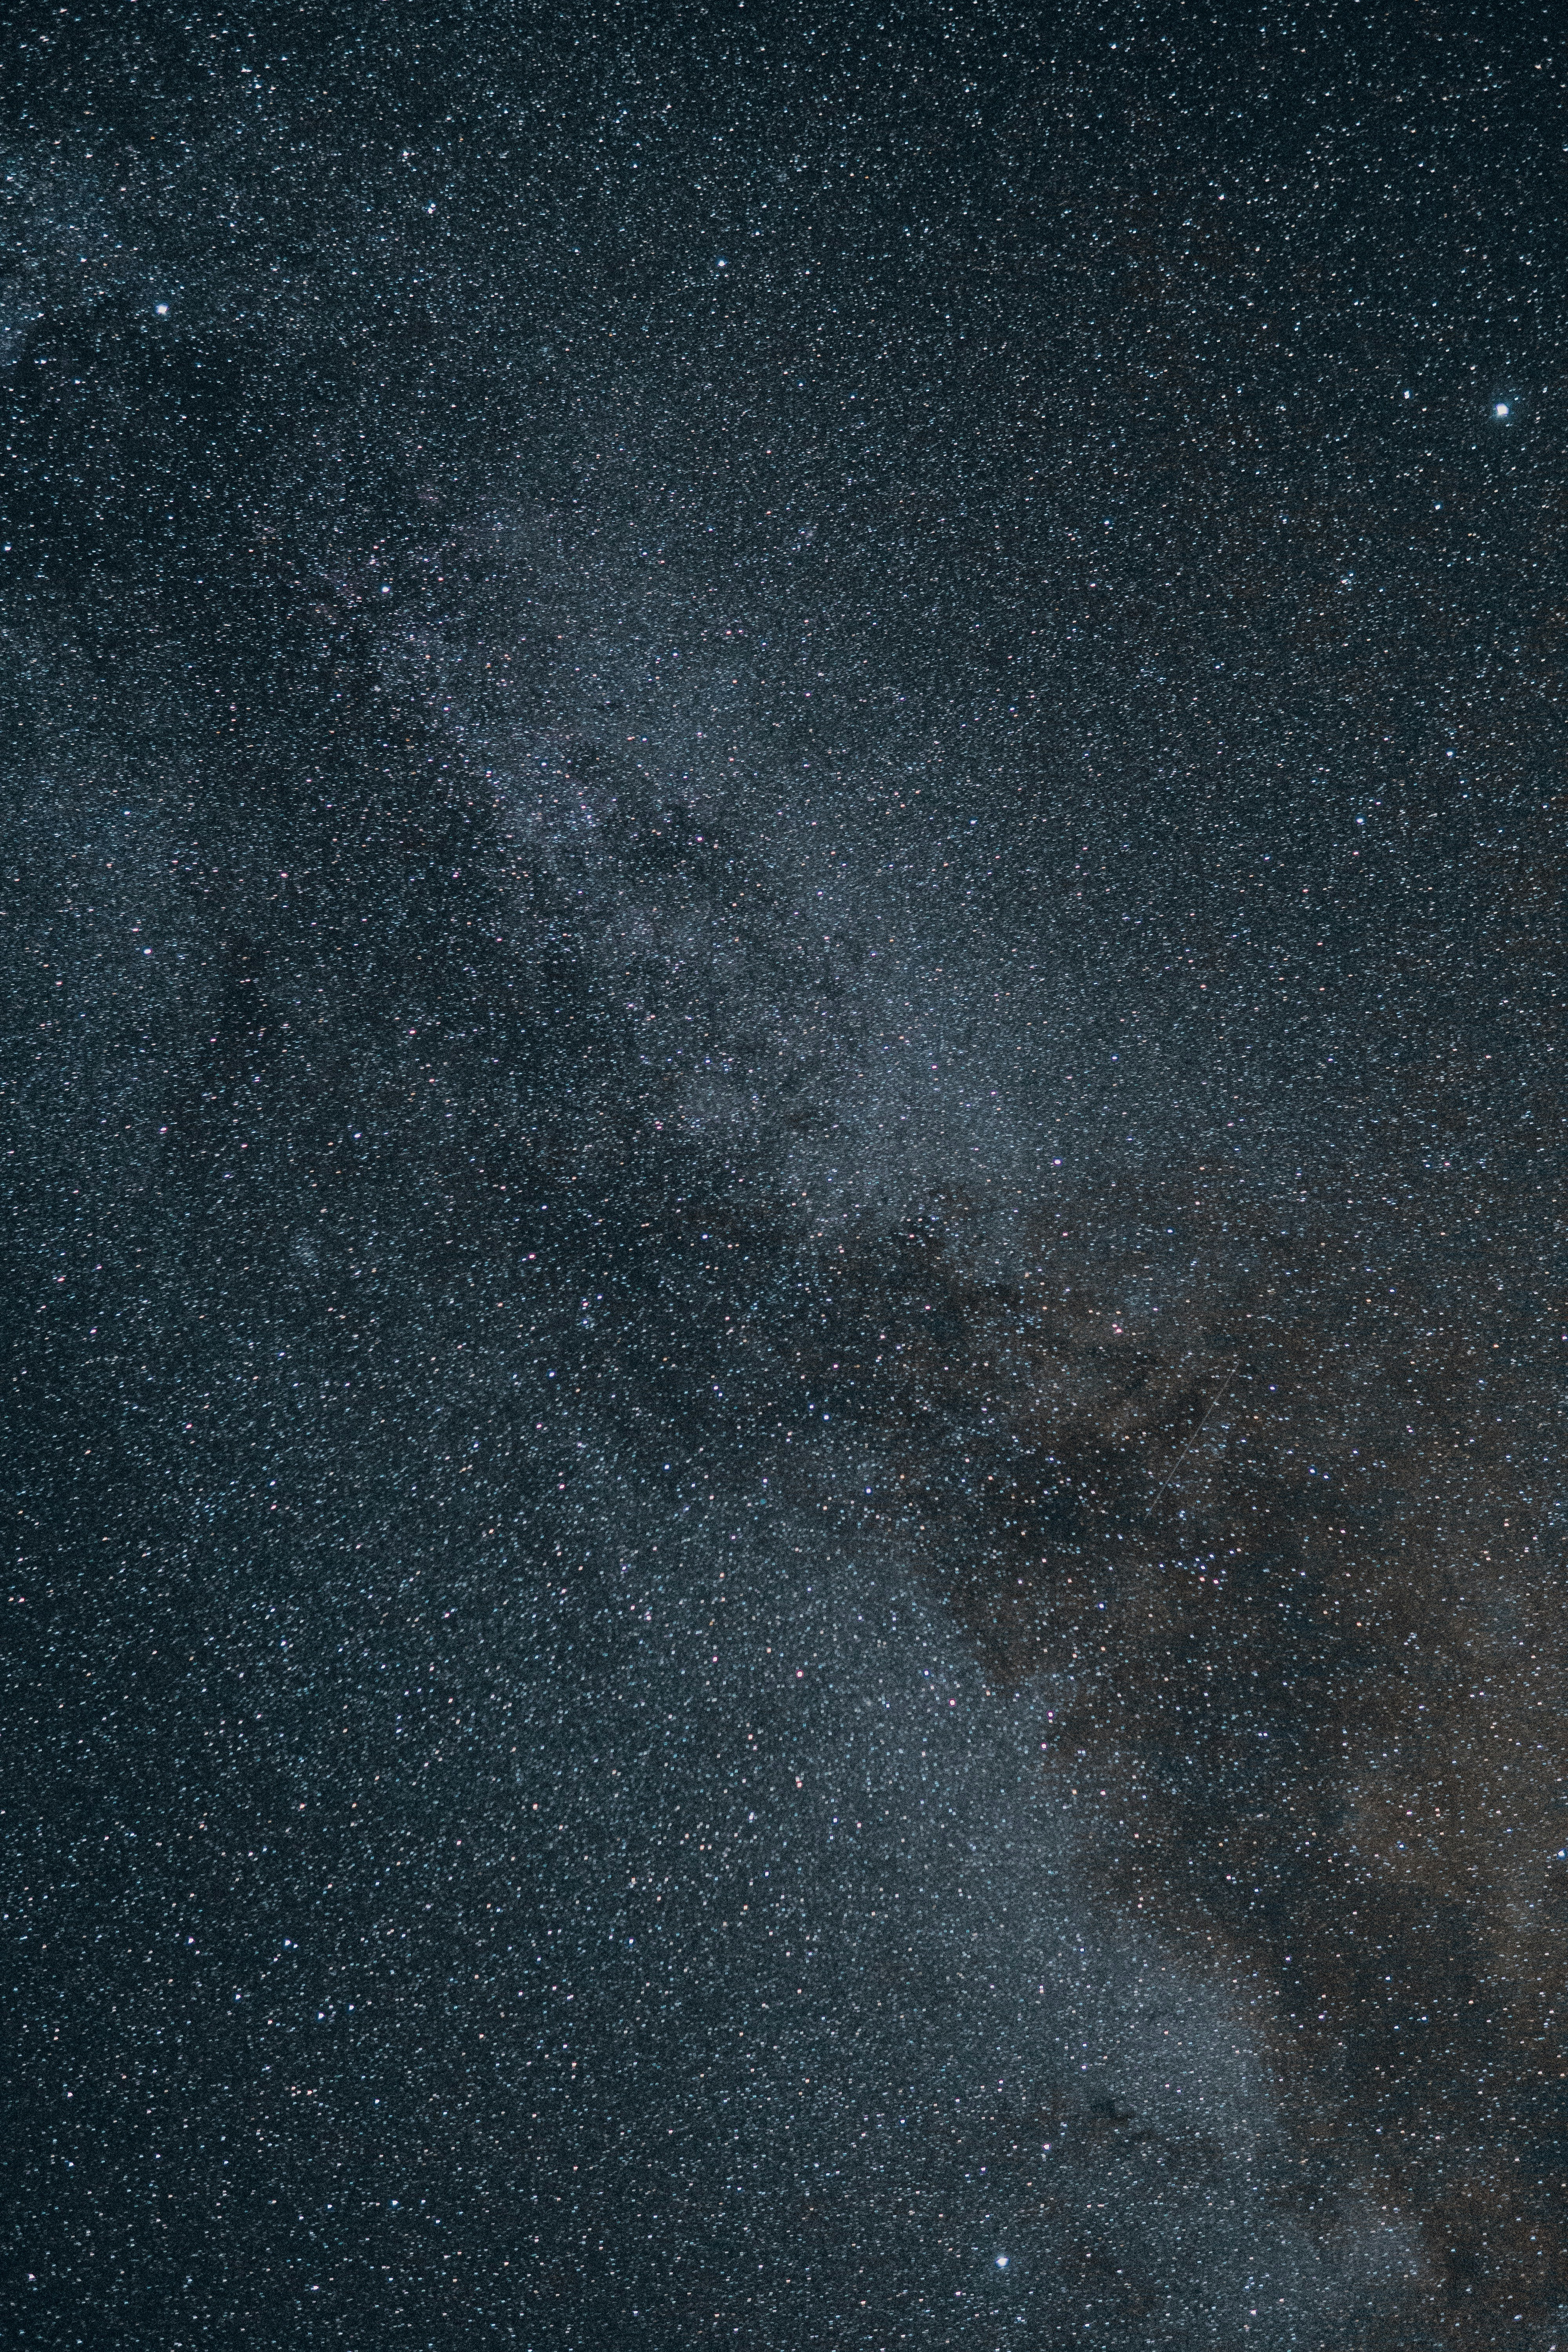 Milky Way over New Mexico